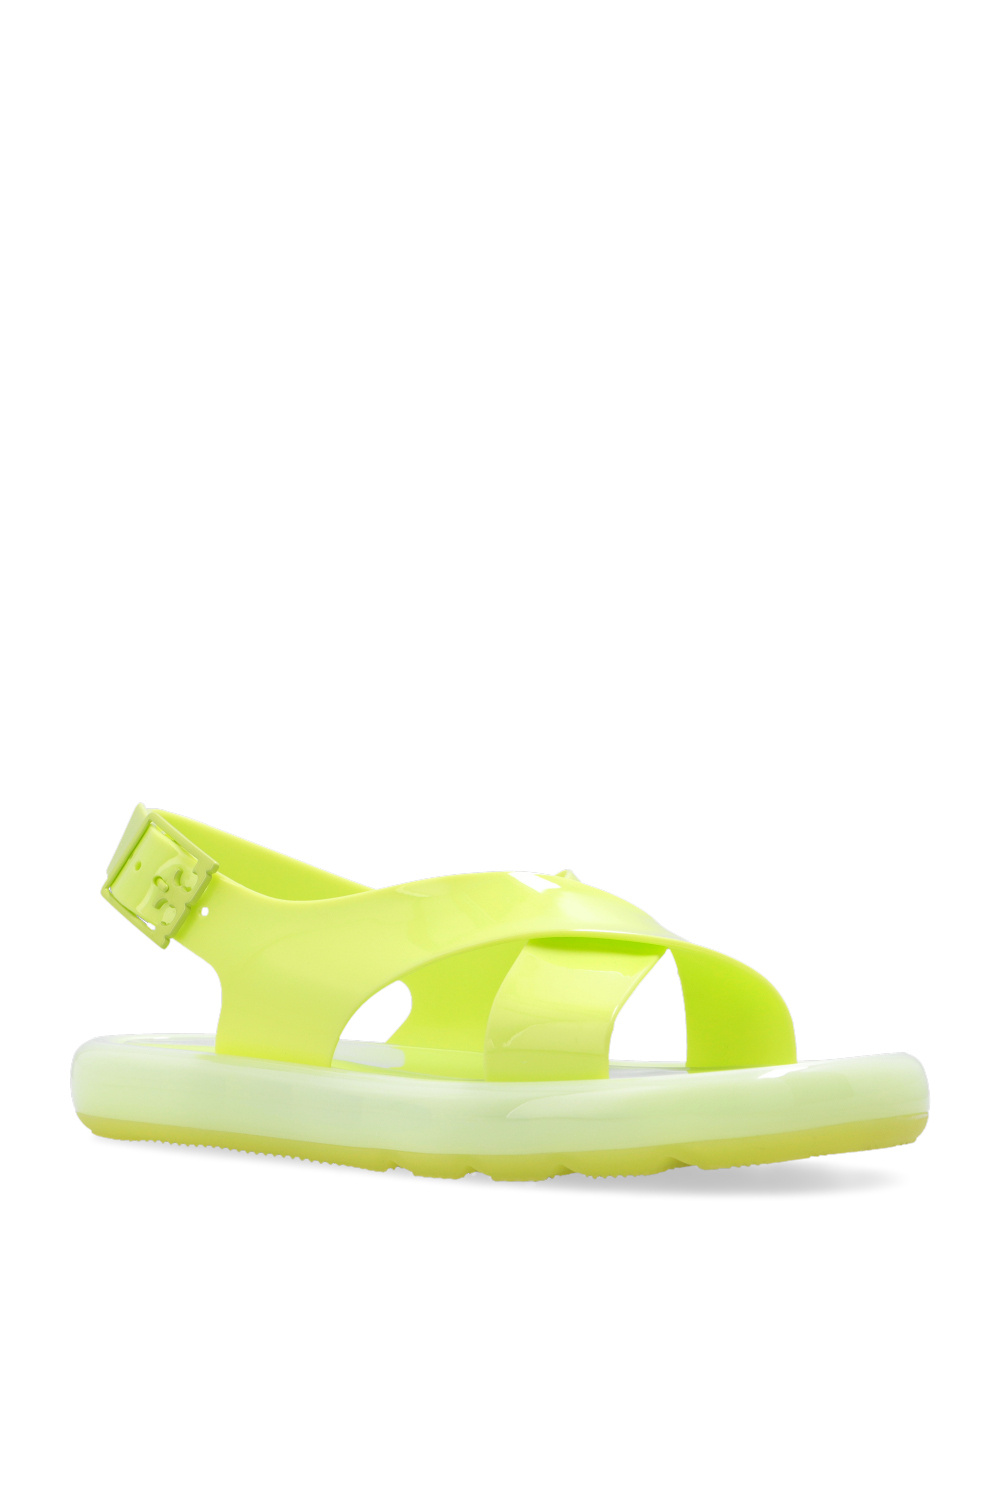 Green 'Bubble Jelly' rubber sandals Tory Burch - Vitkac TW